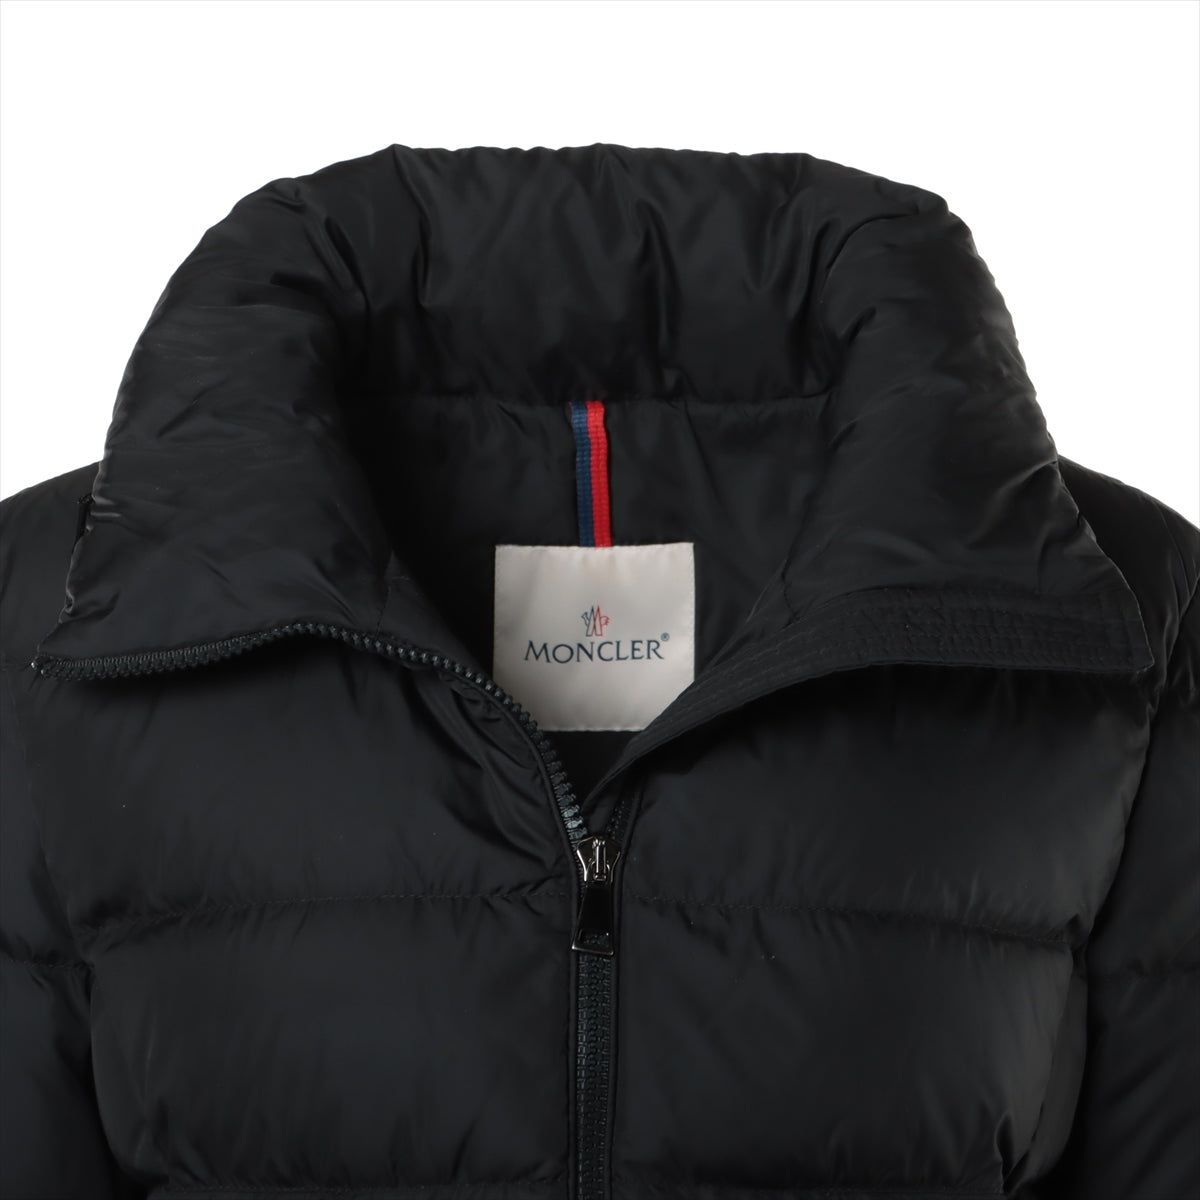 Moncler GIE 22 years Nylon Down coat 1 Ladies' Black  Removable hood